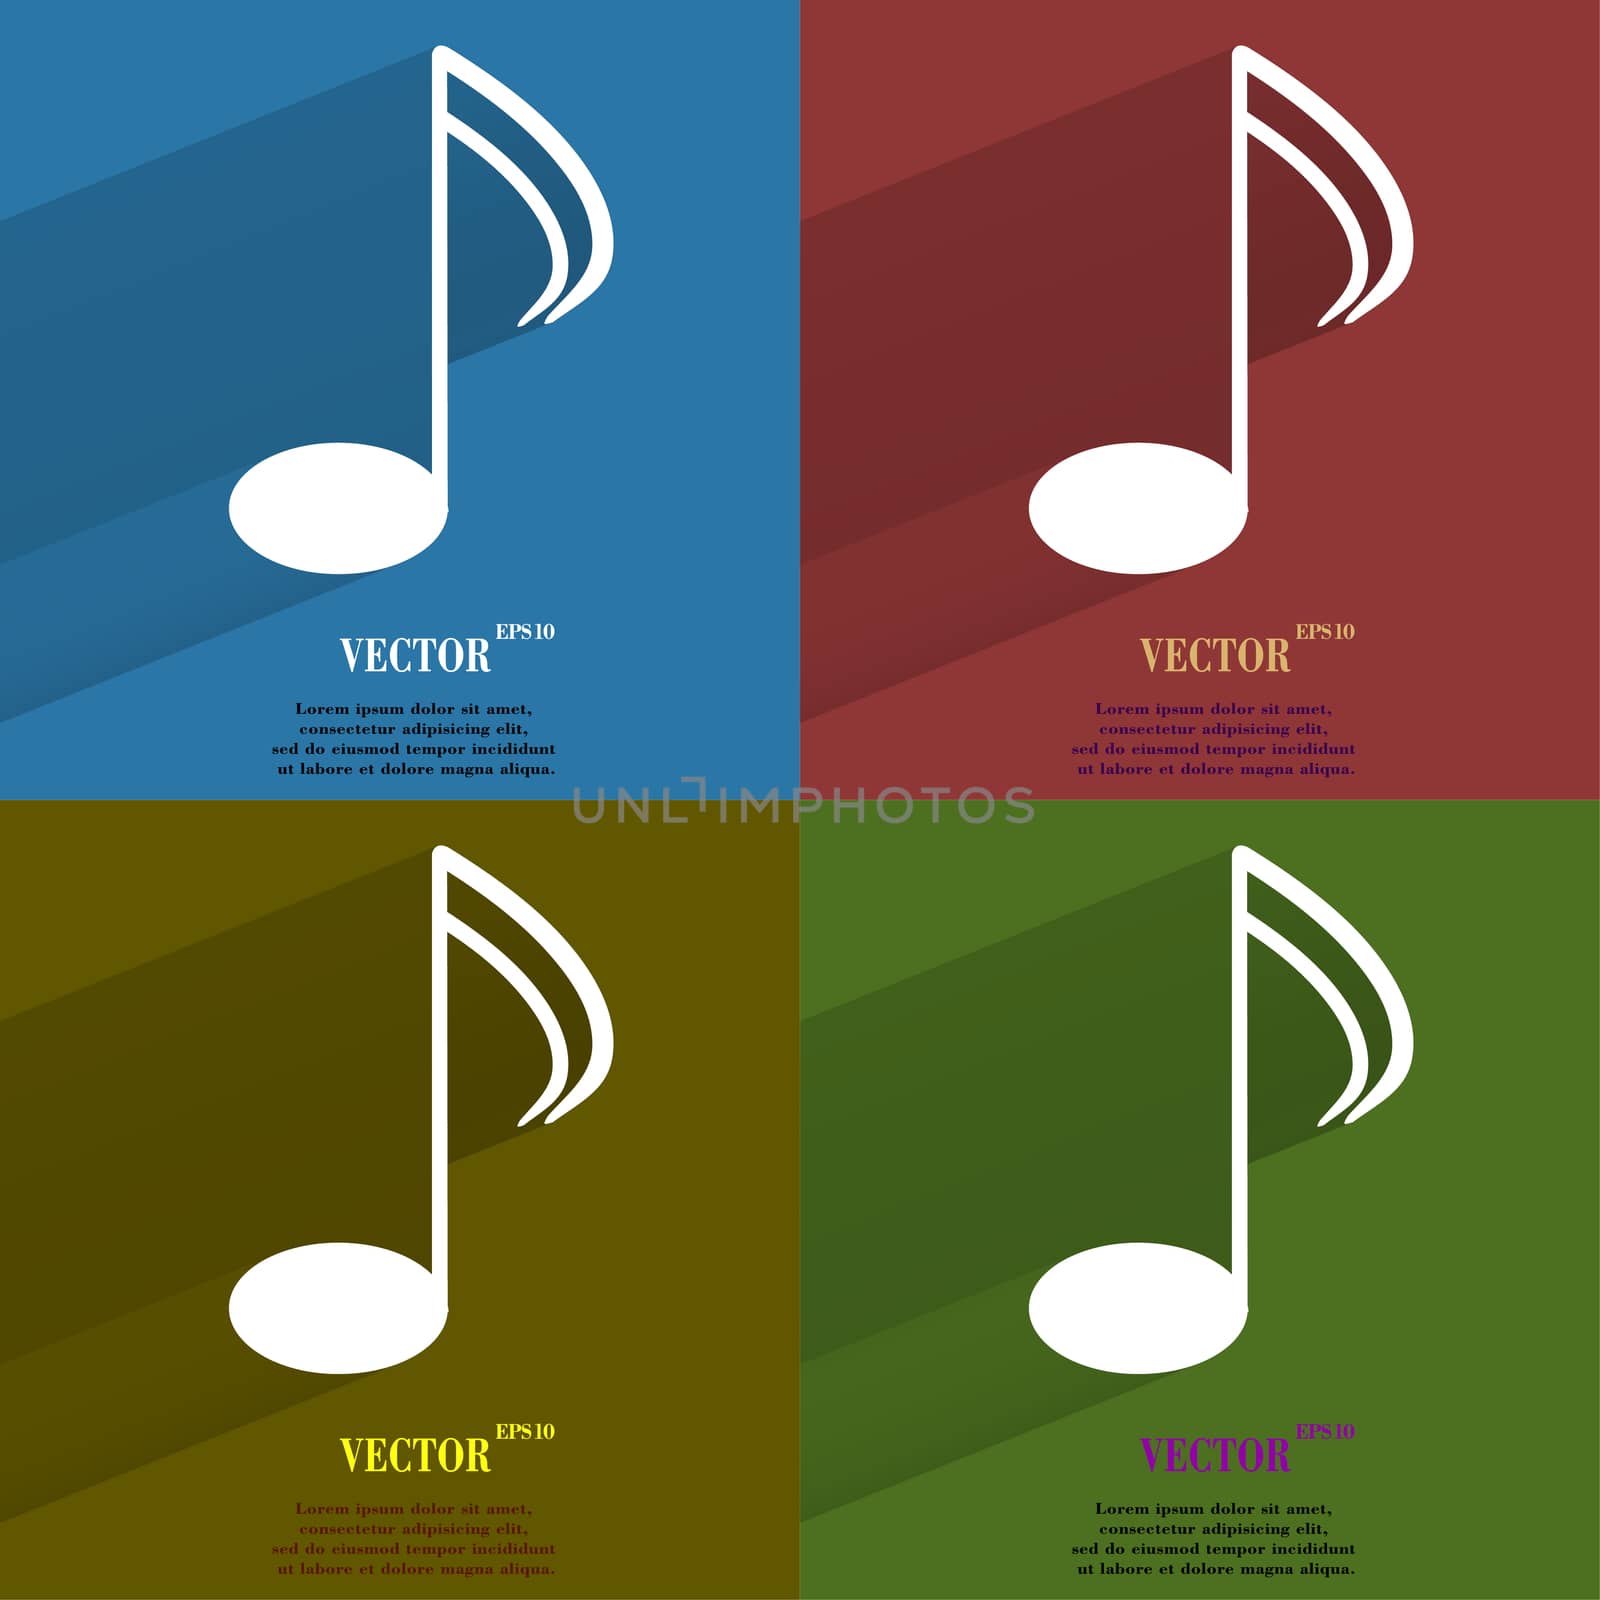 Color set Music elements notes web icon, flat design.  illustration. 